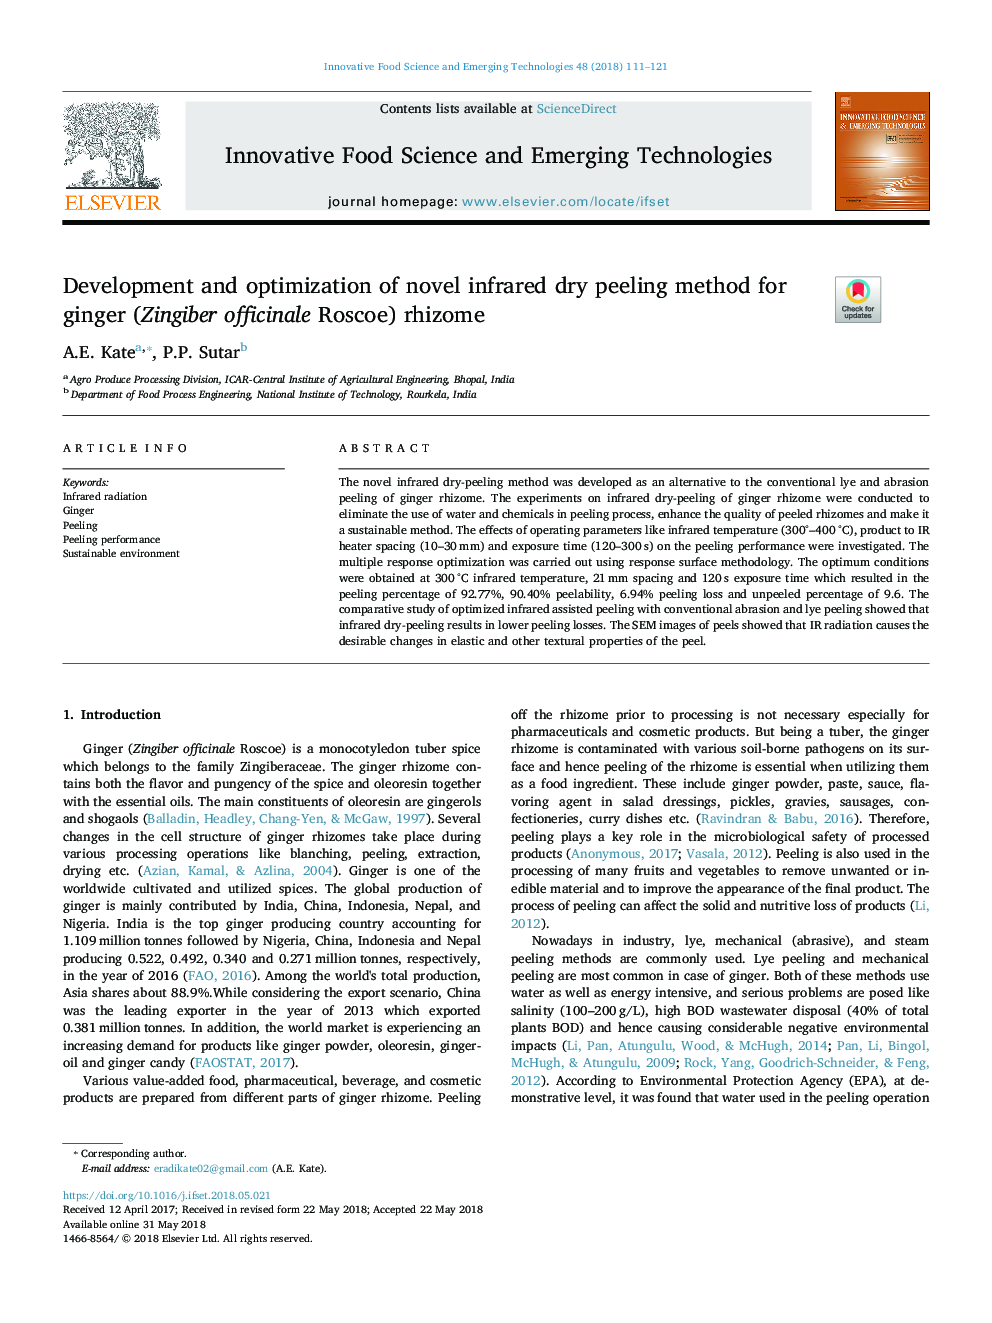 Development and optimization of novel infrared dry peeling method for ginger (Zingiber officinale Roscoe) rhizome